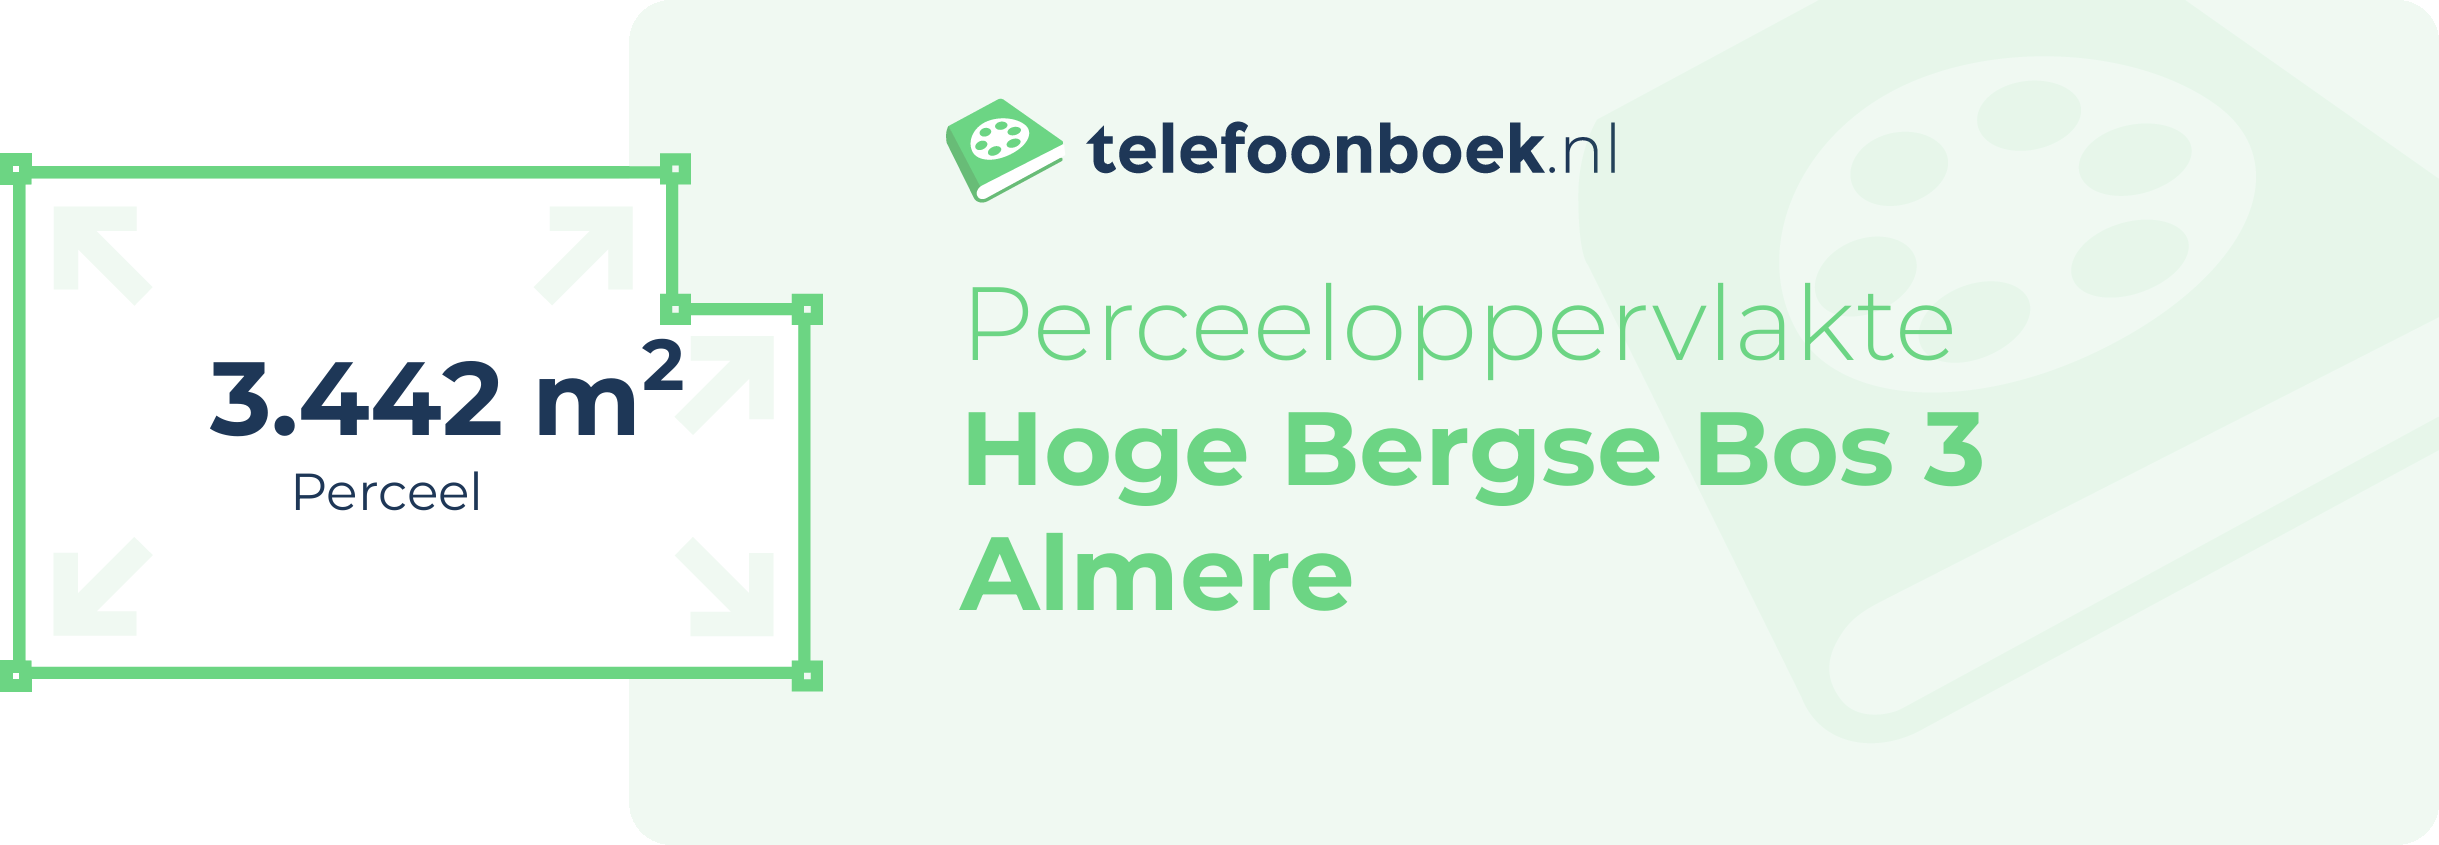 Perceeloppervlakte Hoge Bergse Bos 3 Almere